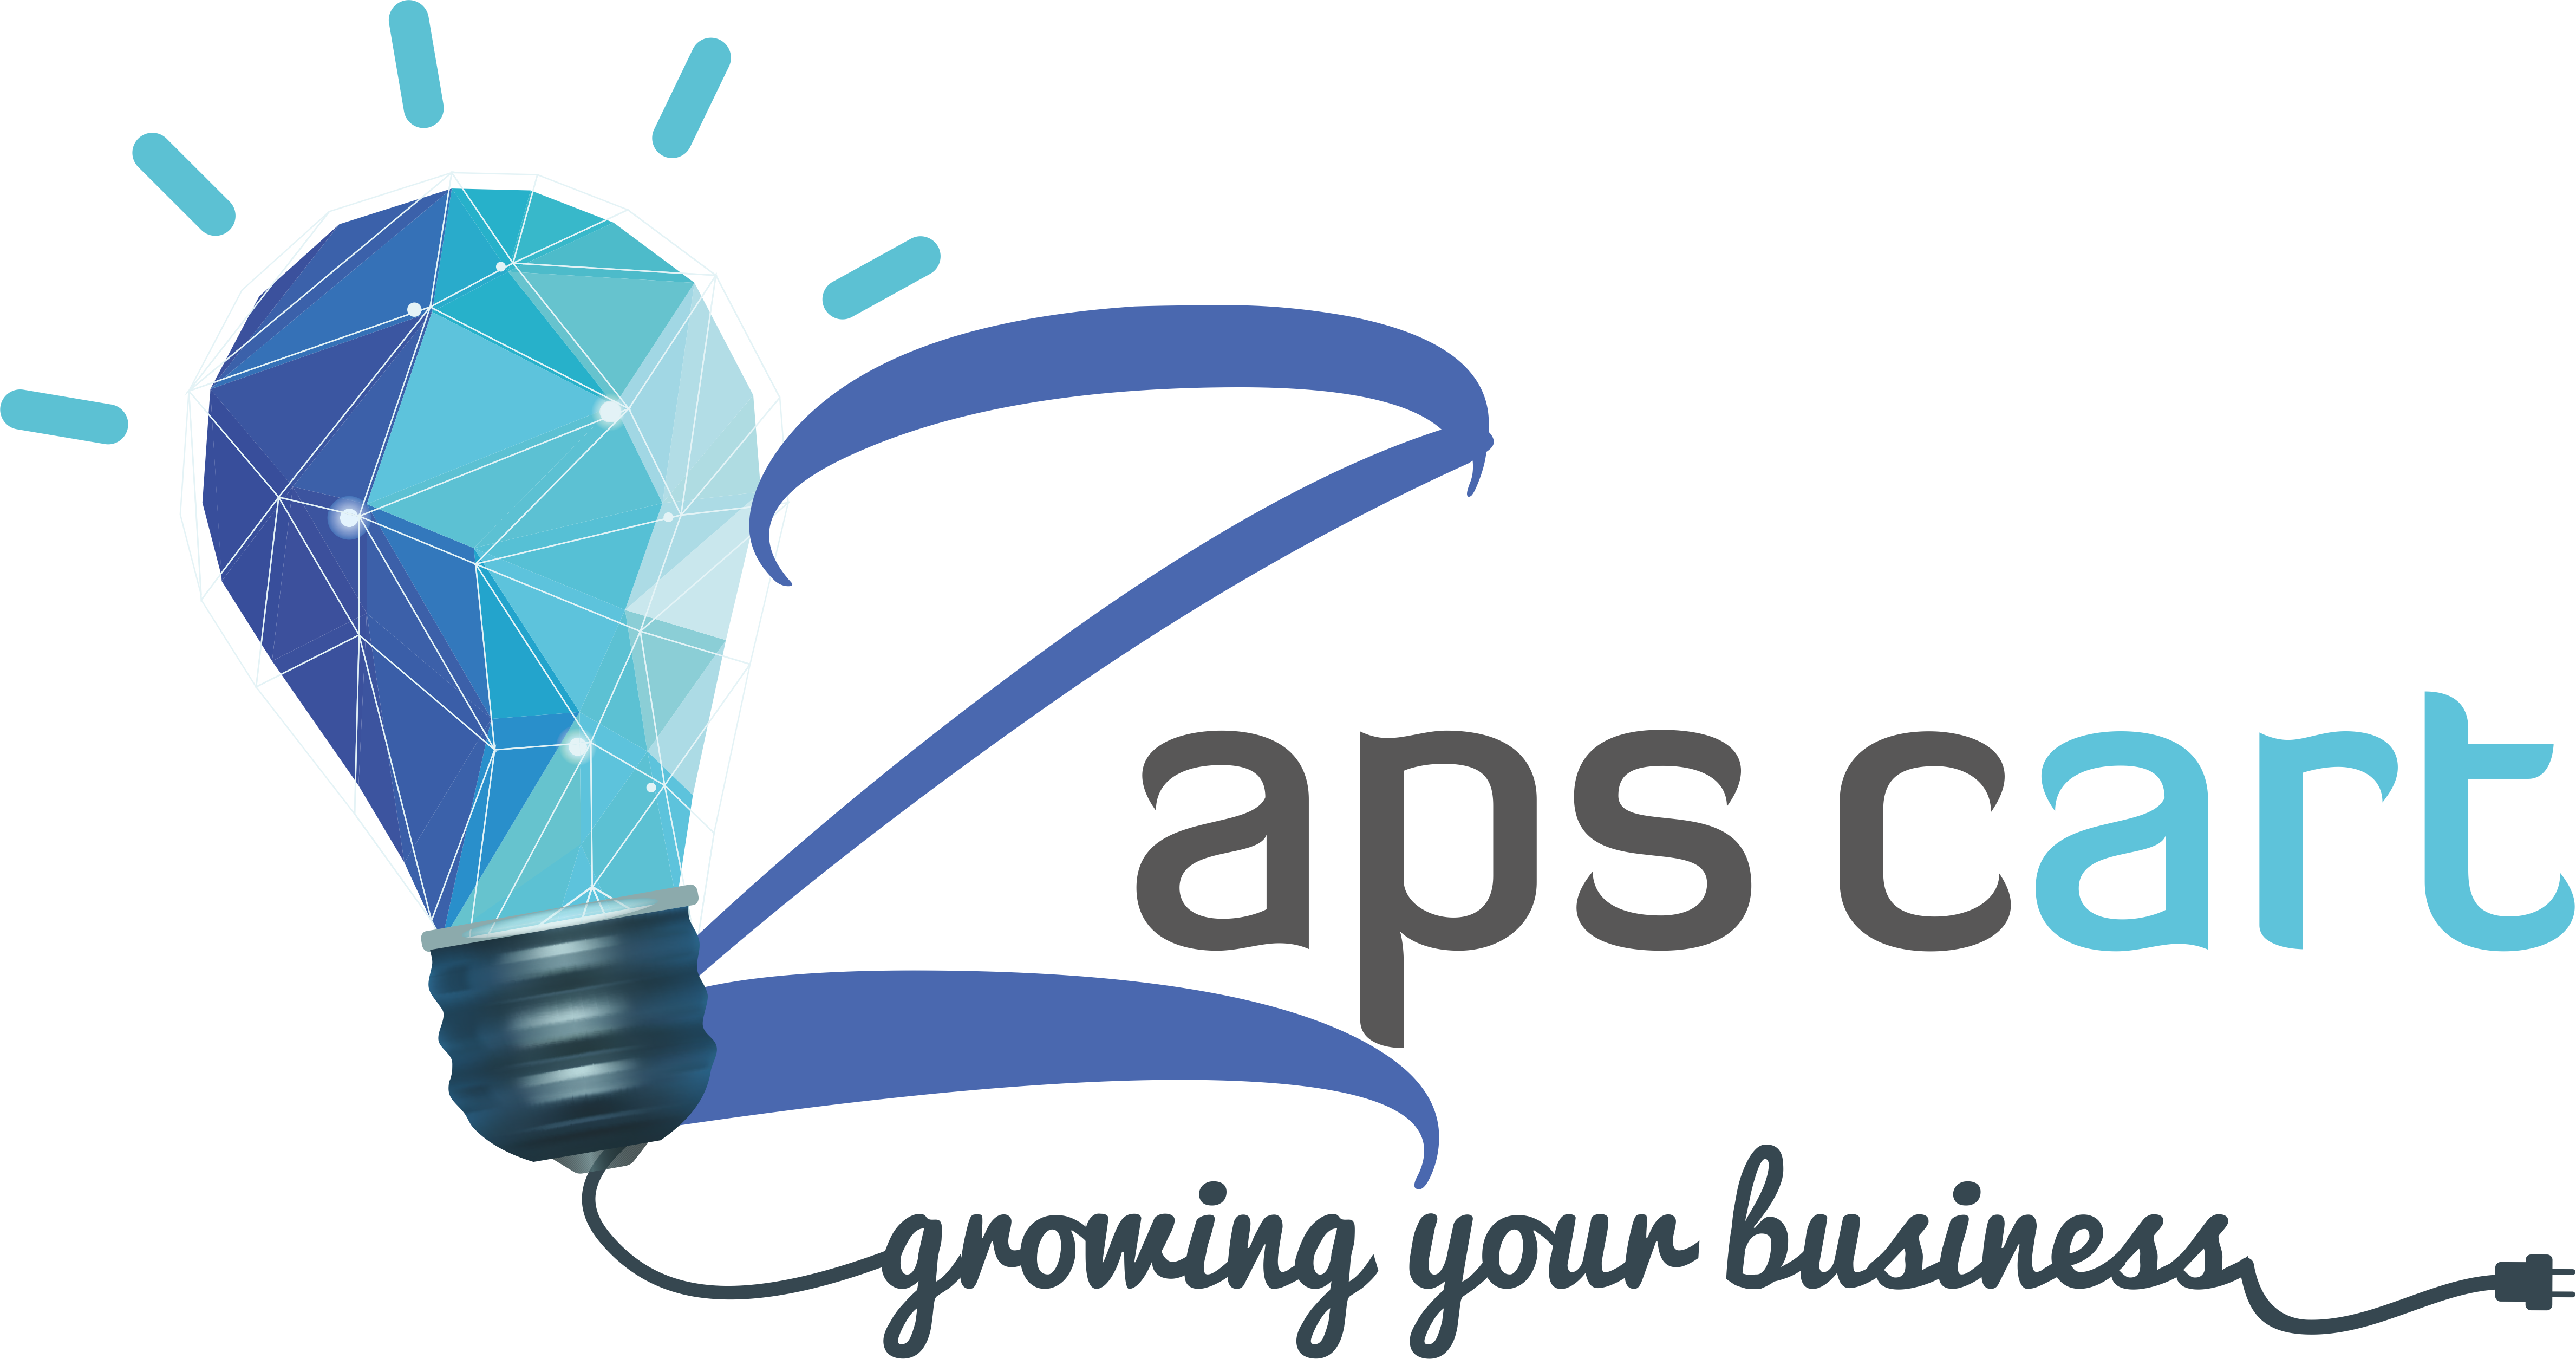 Zapscart - Growing Your Business